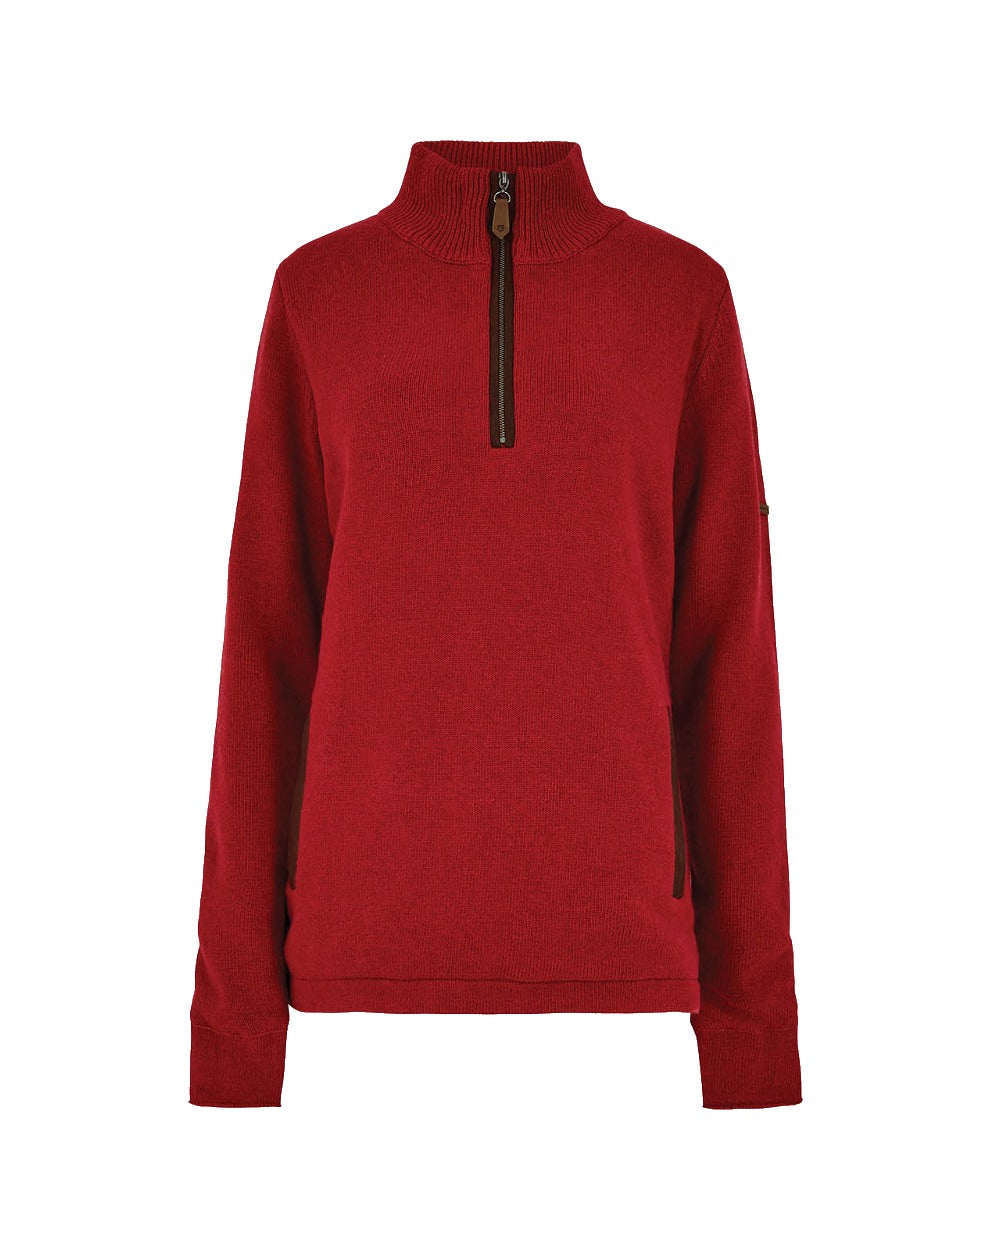 Dubarry Morrisey Zip Neck Sweater in Cardinal 